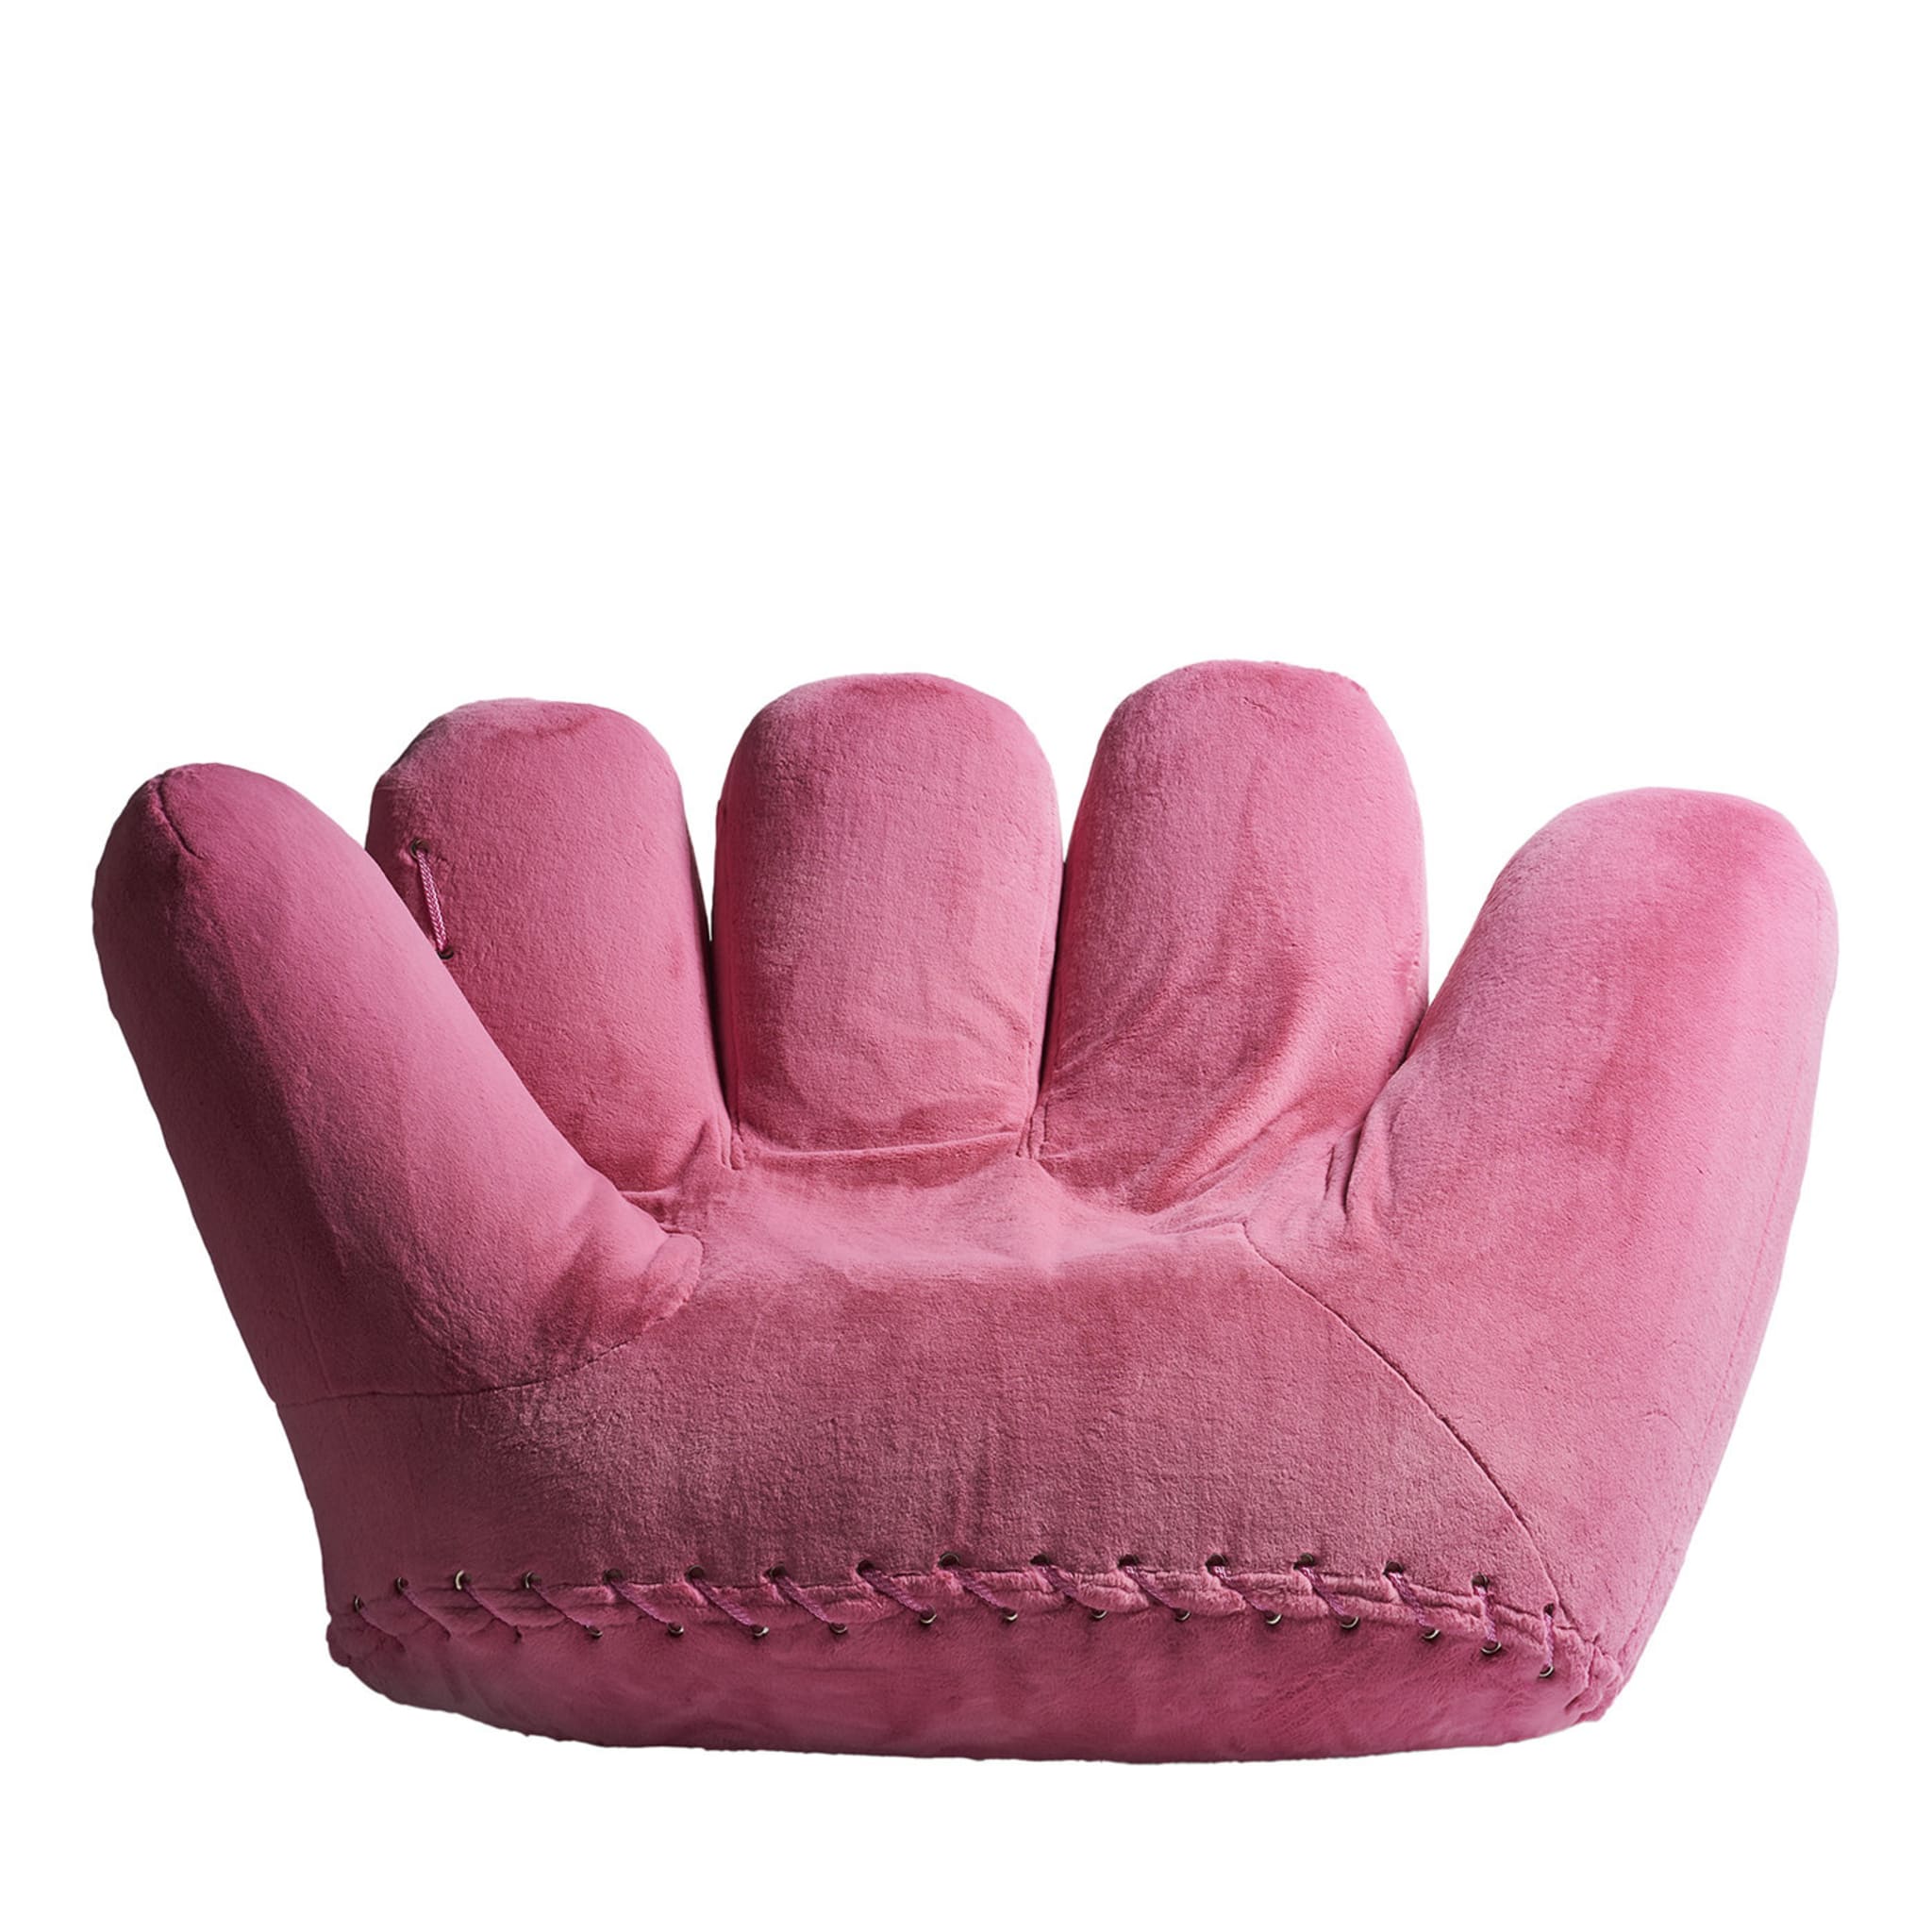 Joe Plush Pink Armchair - Main view